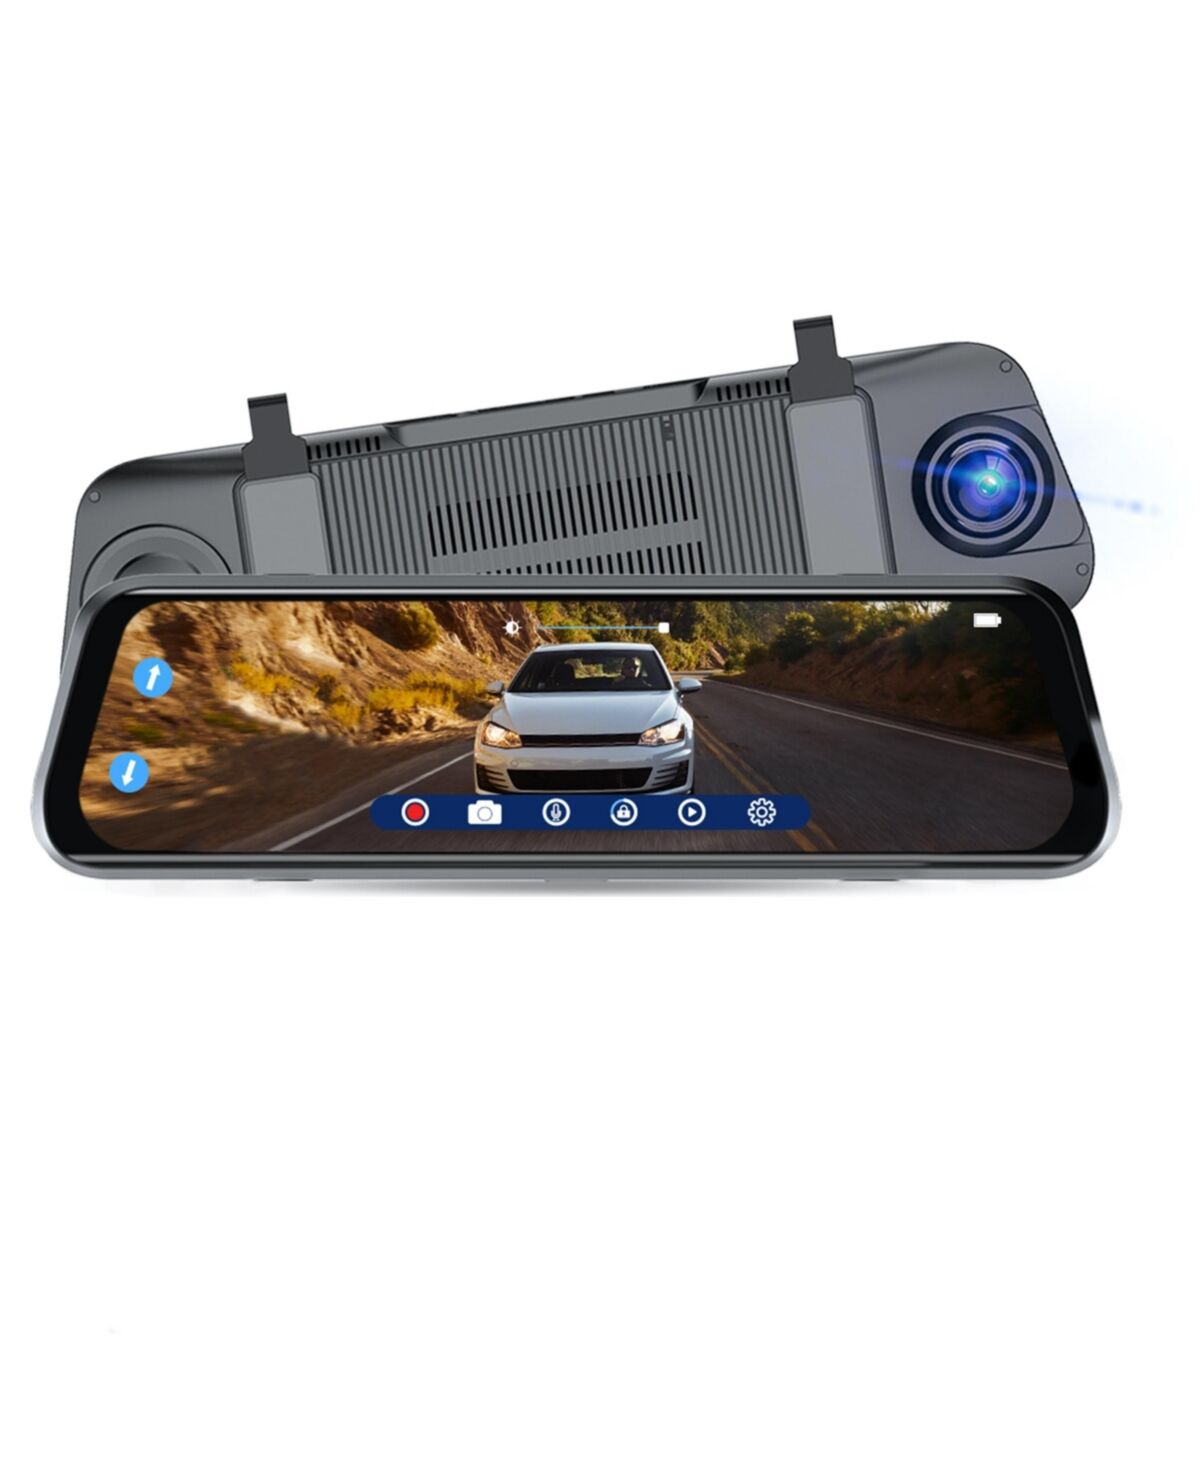 Sylvania Roadsight Mirror Dash Camera and Backup Camera - 340 degree View - Hd 1080p, Elastic Mount, 32GB Memory Card, G-Sensor, 9.66